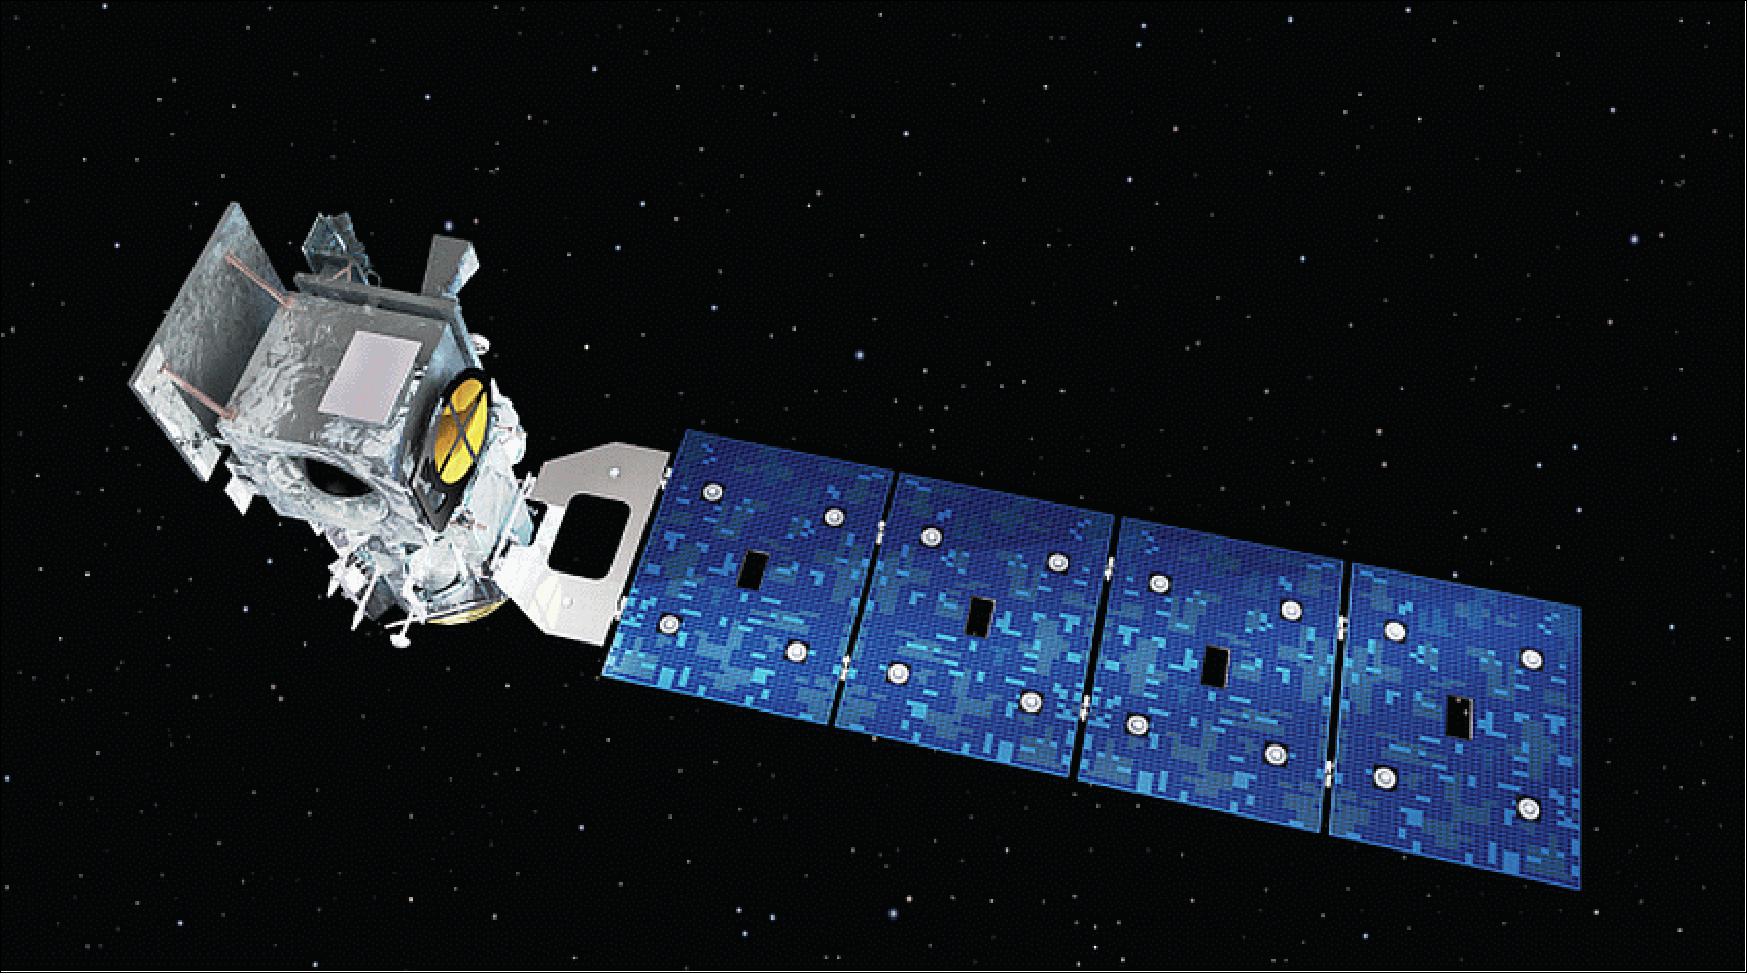 Figure 3: Artist's view of the ICESat-2 spacecraft (image credit: Orbital)